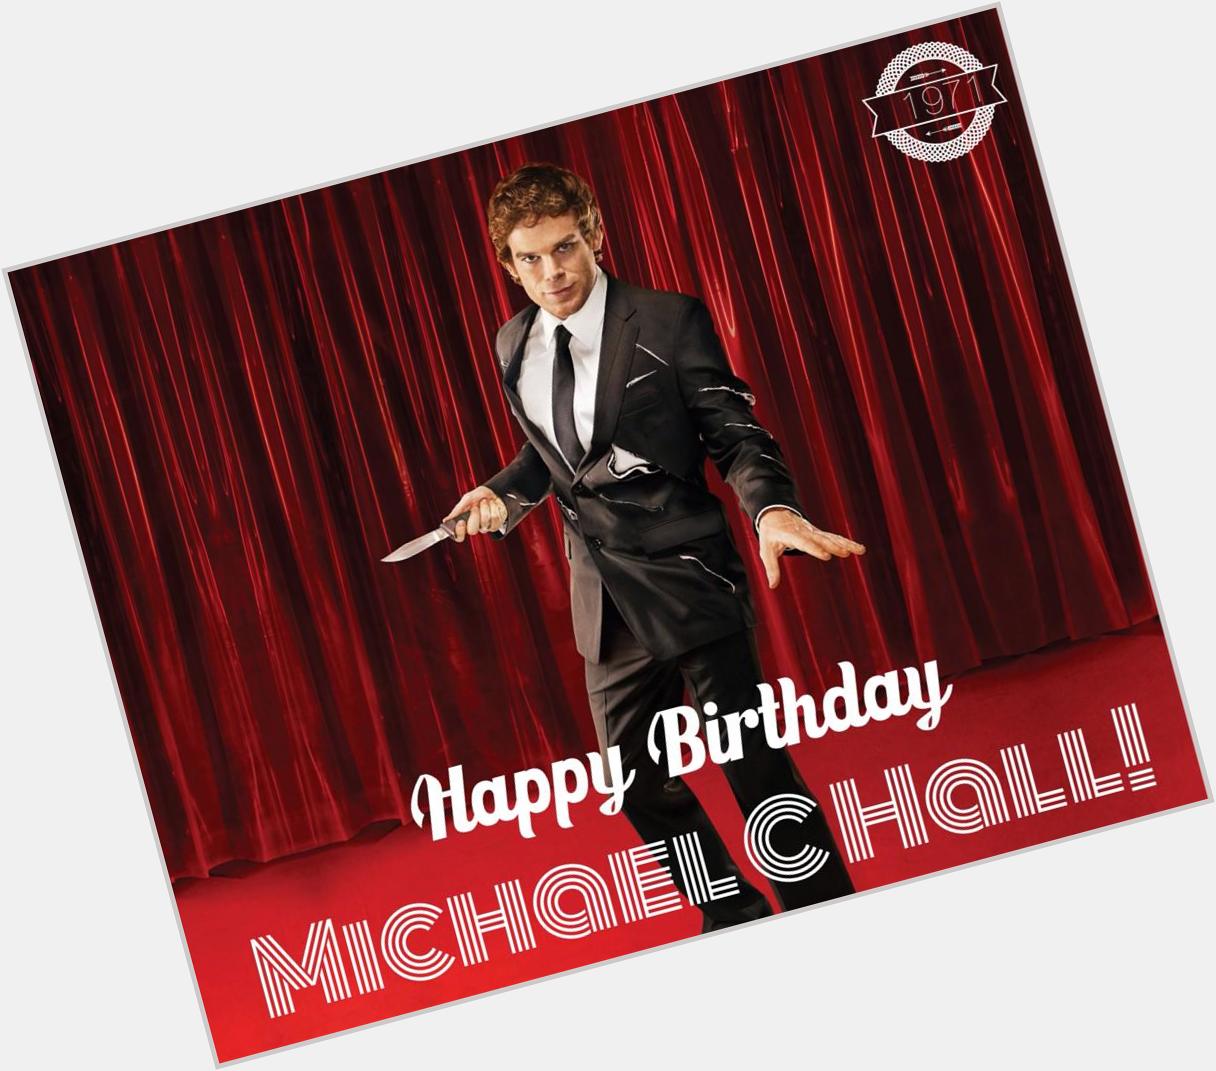 Happy birthday Michael C Hall!!! 